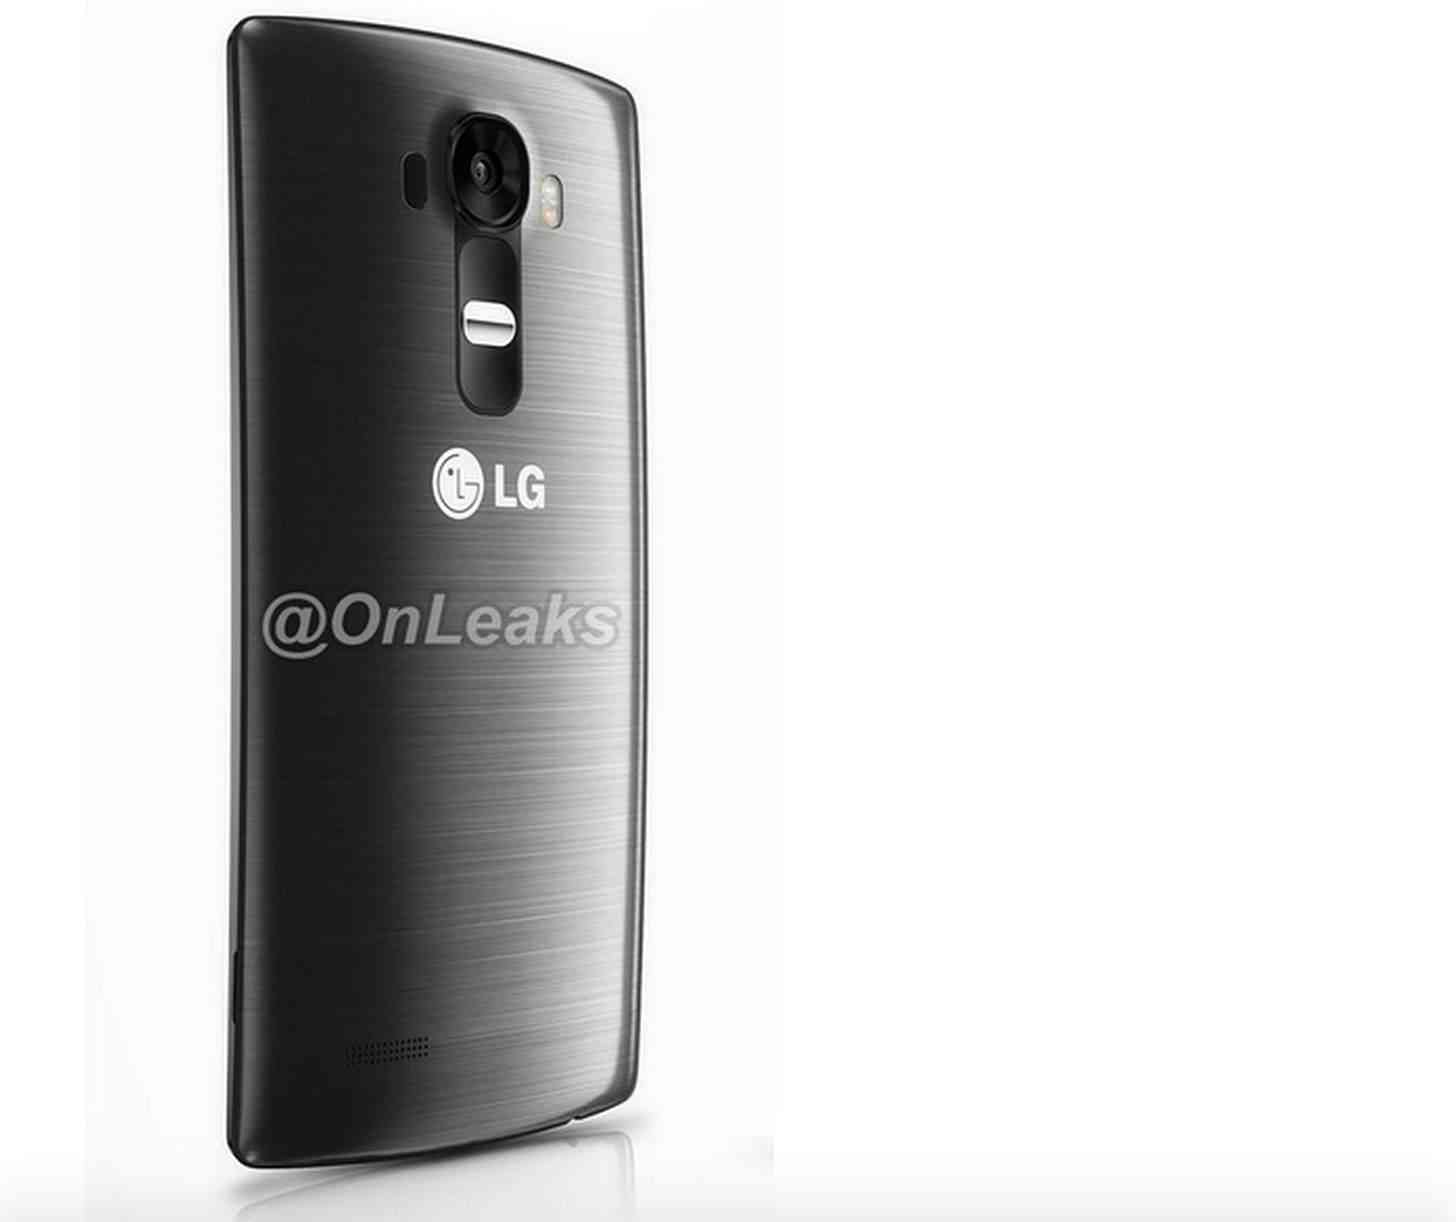 LG G4 render